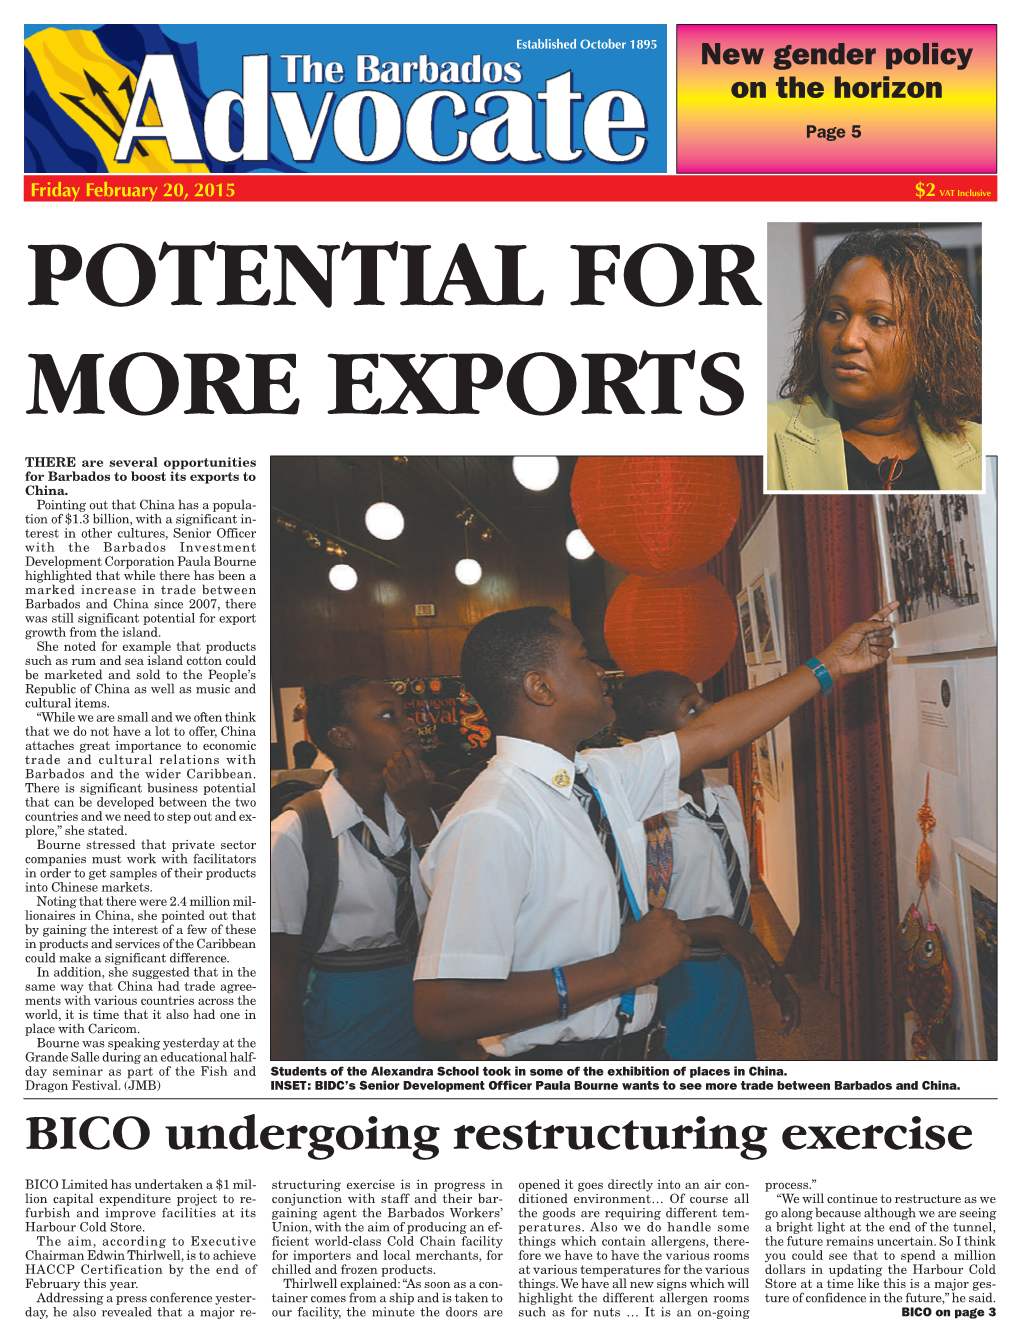 BICO Undergoing Restructuring Exercise